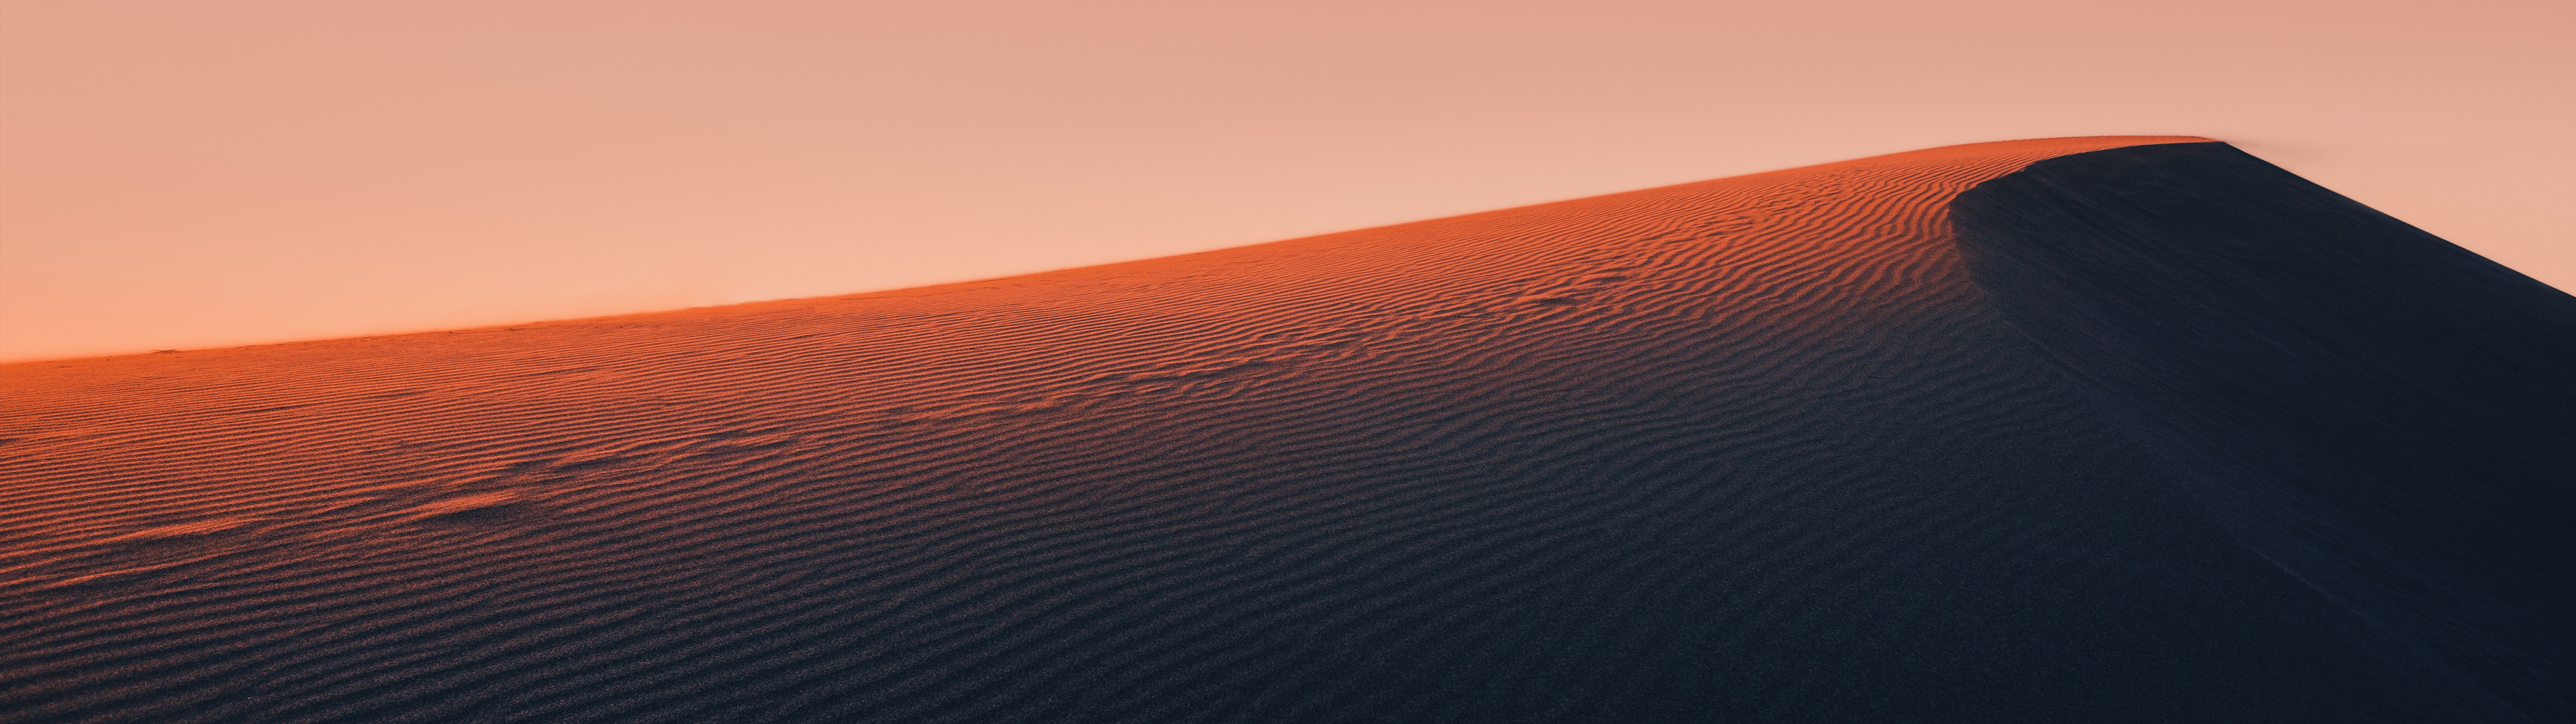 Desert Dunes Landscape Ultrawide 5120x1440